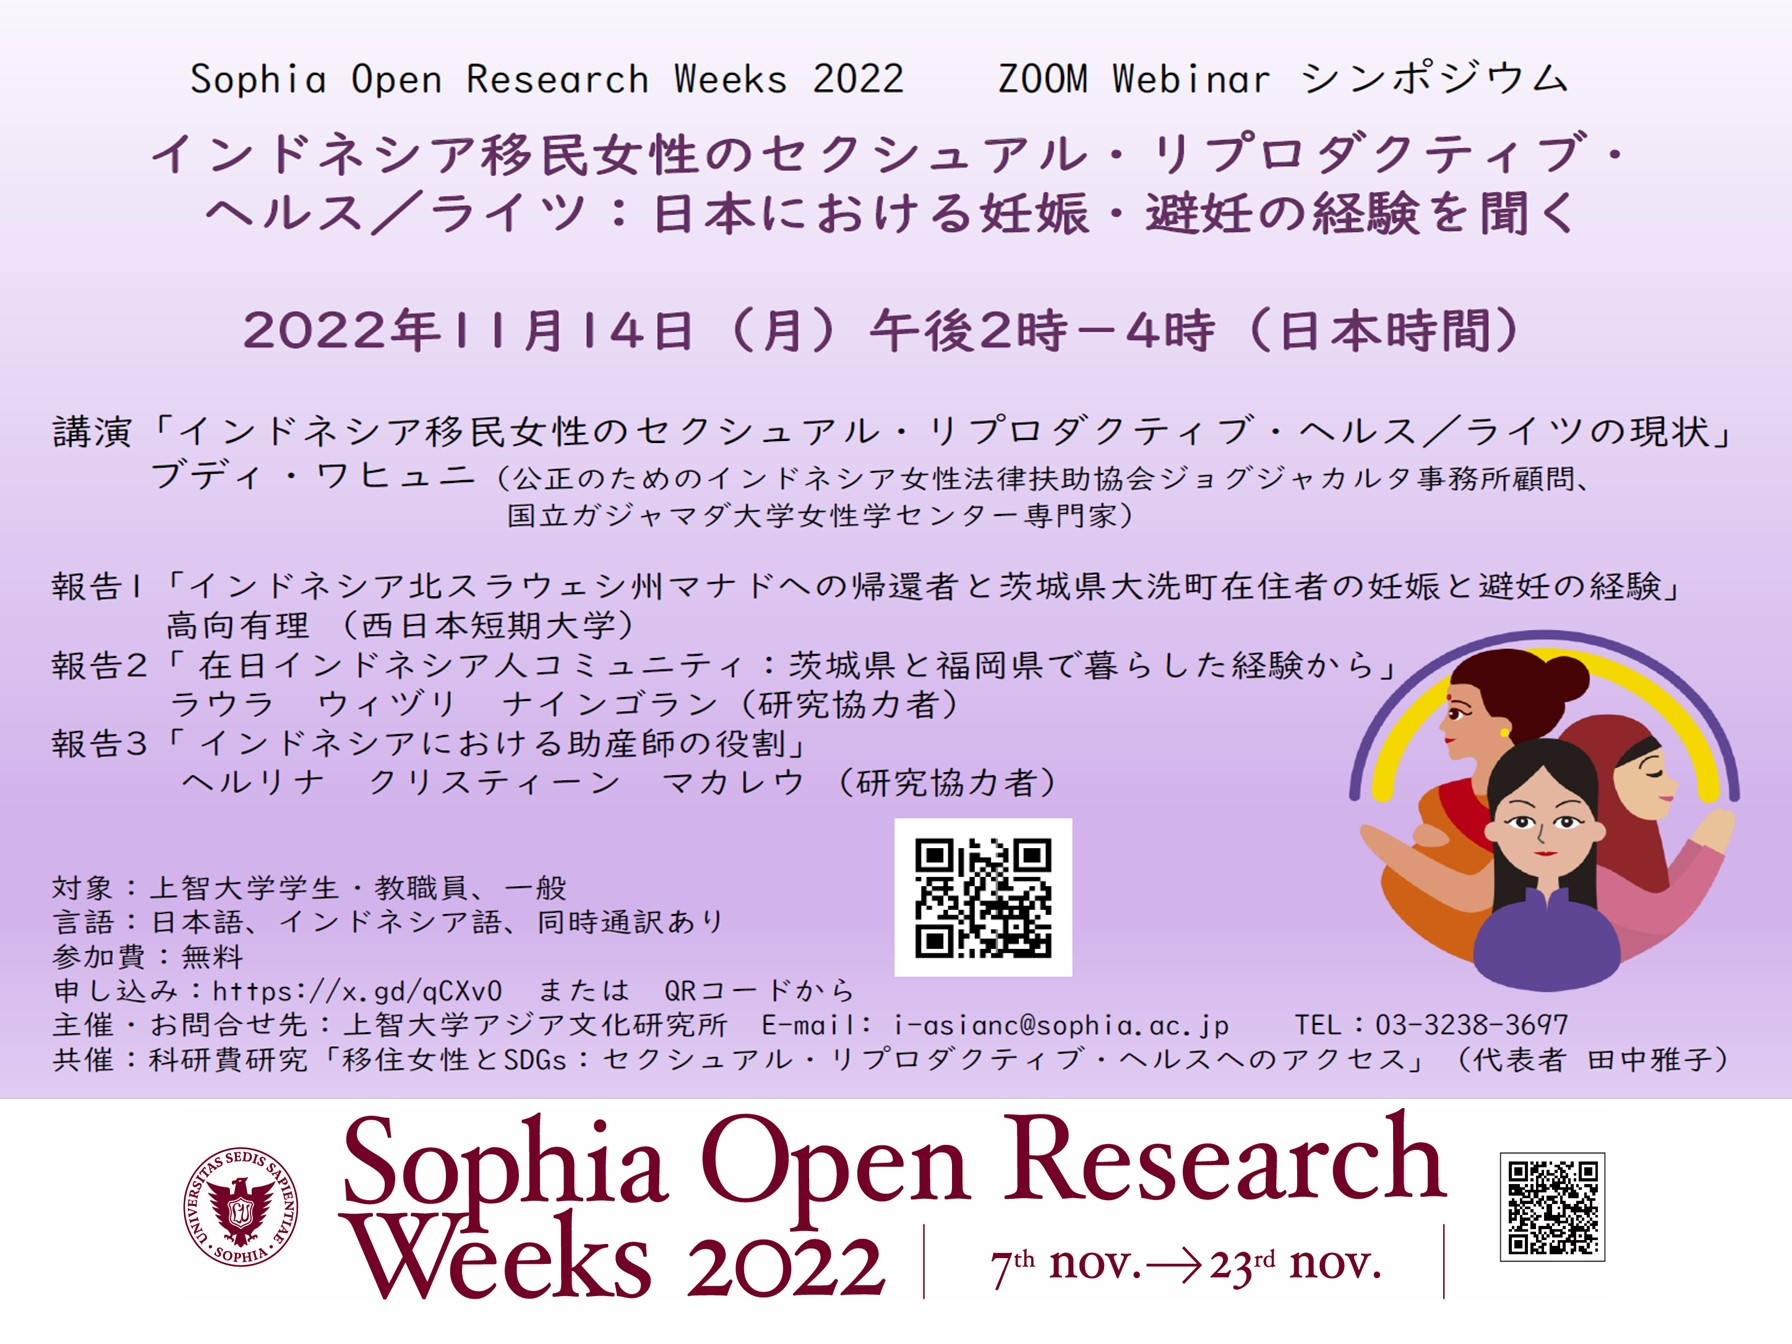 Sophia Open Research Week 2022 Webinarシンポジウム 「インドネシア移民女性のセクシュアル・リプロダクティブ・ヘルス／ライツ 日本における妊娠・避妊の経験を聞く」(2022年11月14日）